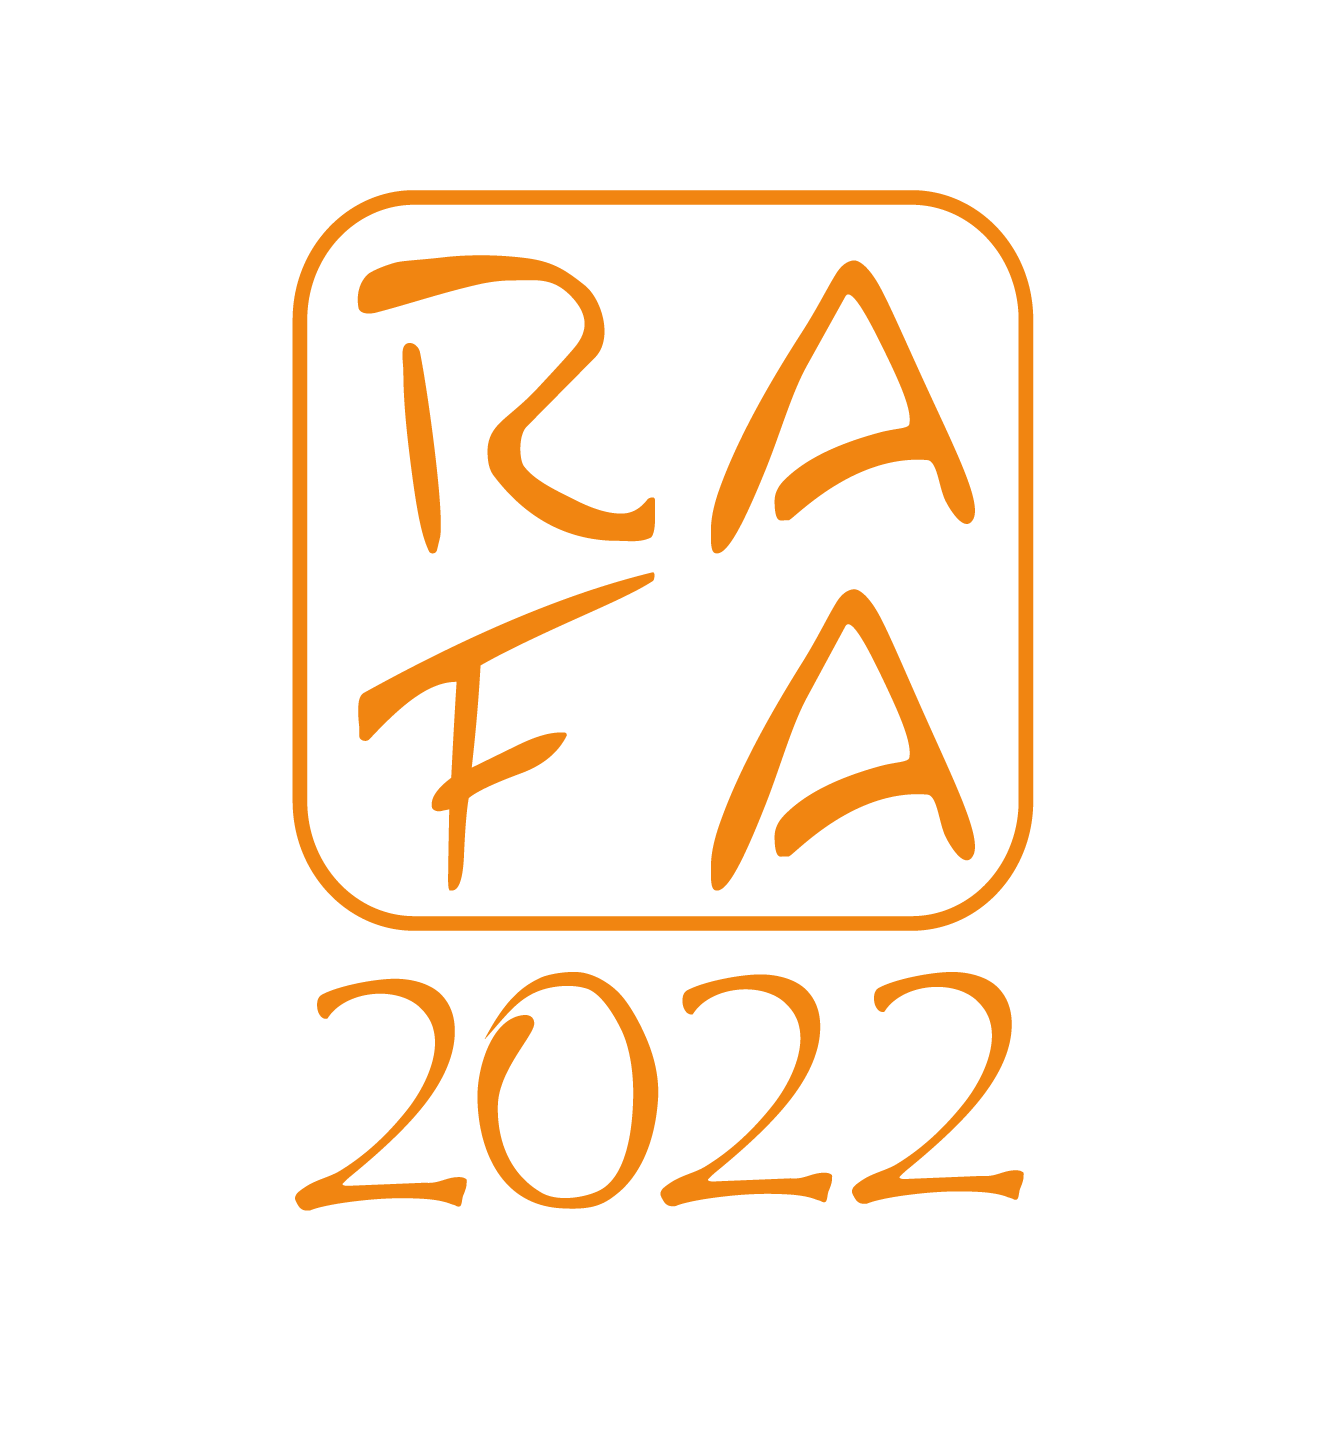 10th International Symposium on Recent Advances in Food Analysis (RAFA 2022)